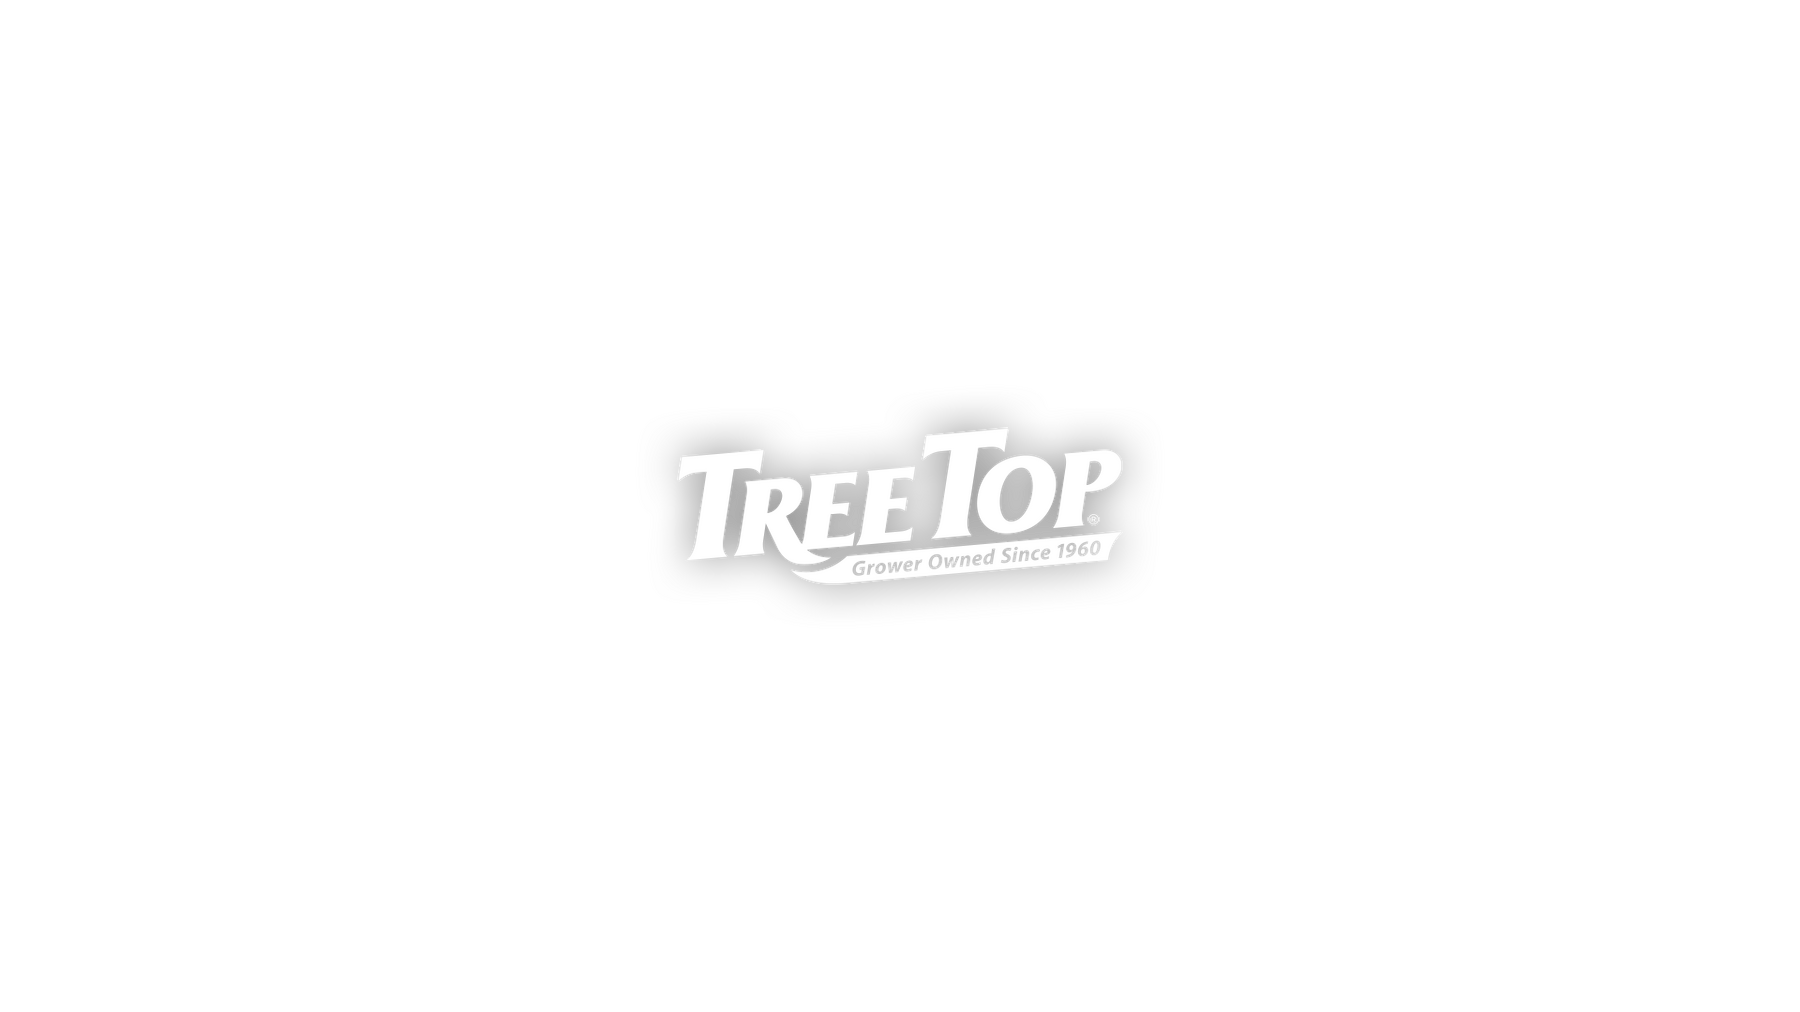 Tree top center